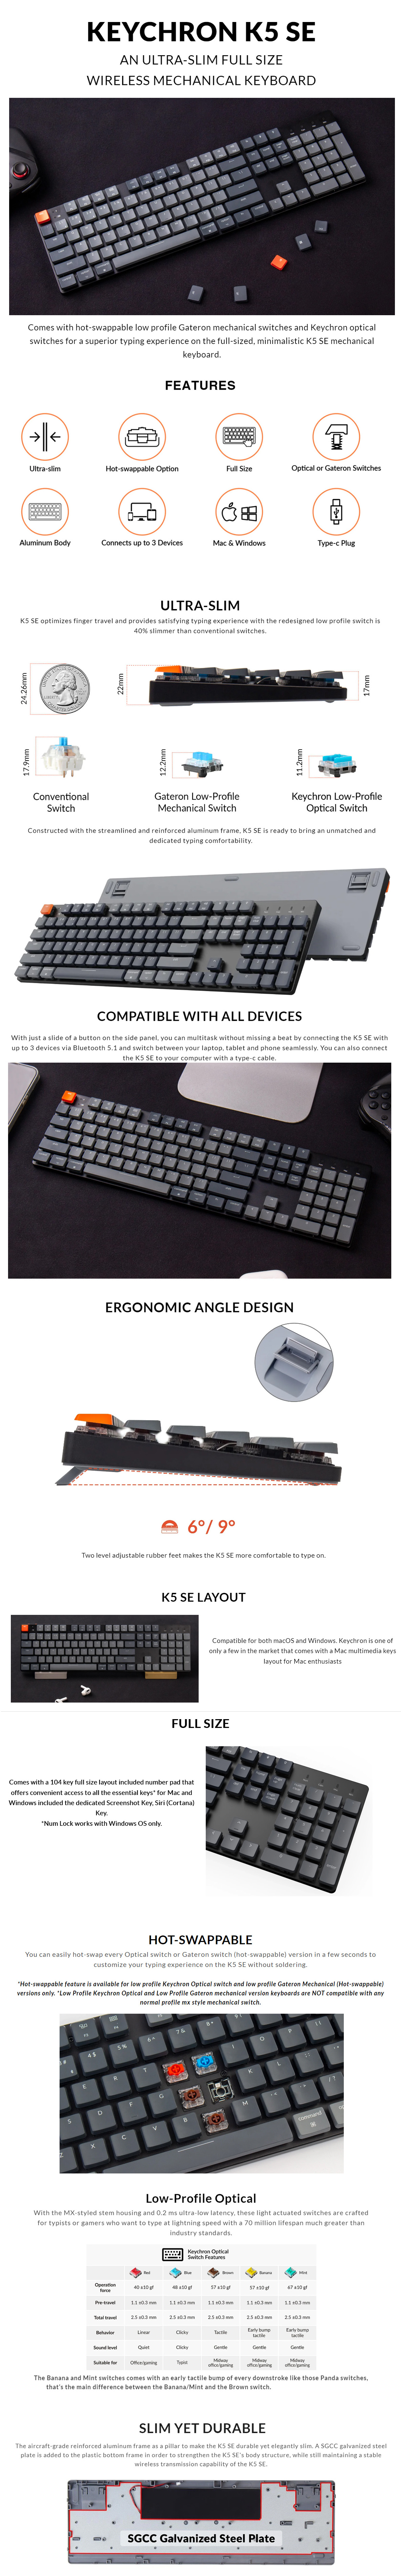 Keyboards-Keychron-K5-SE-RGB-Wireless-Full-Optical-Mechanical-Keyboard-Brown-Switch-2